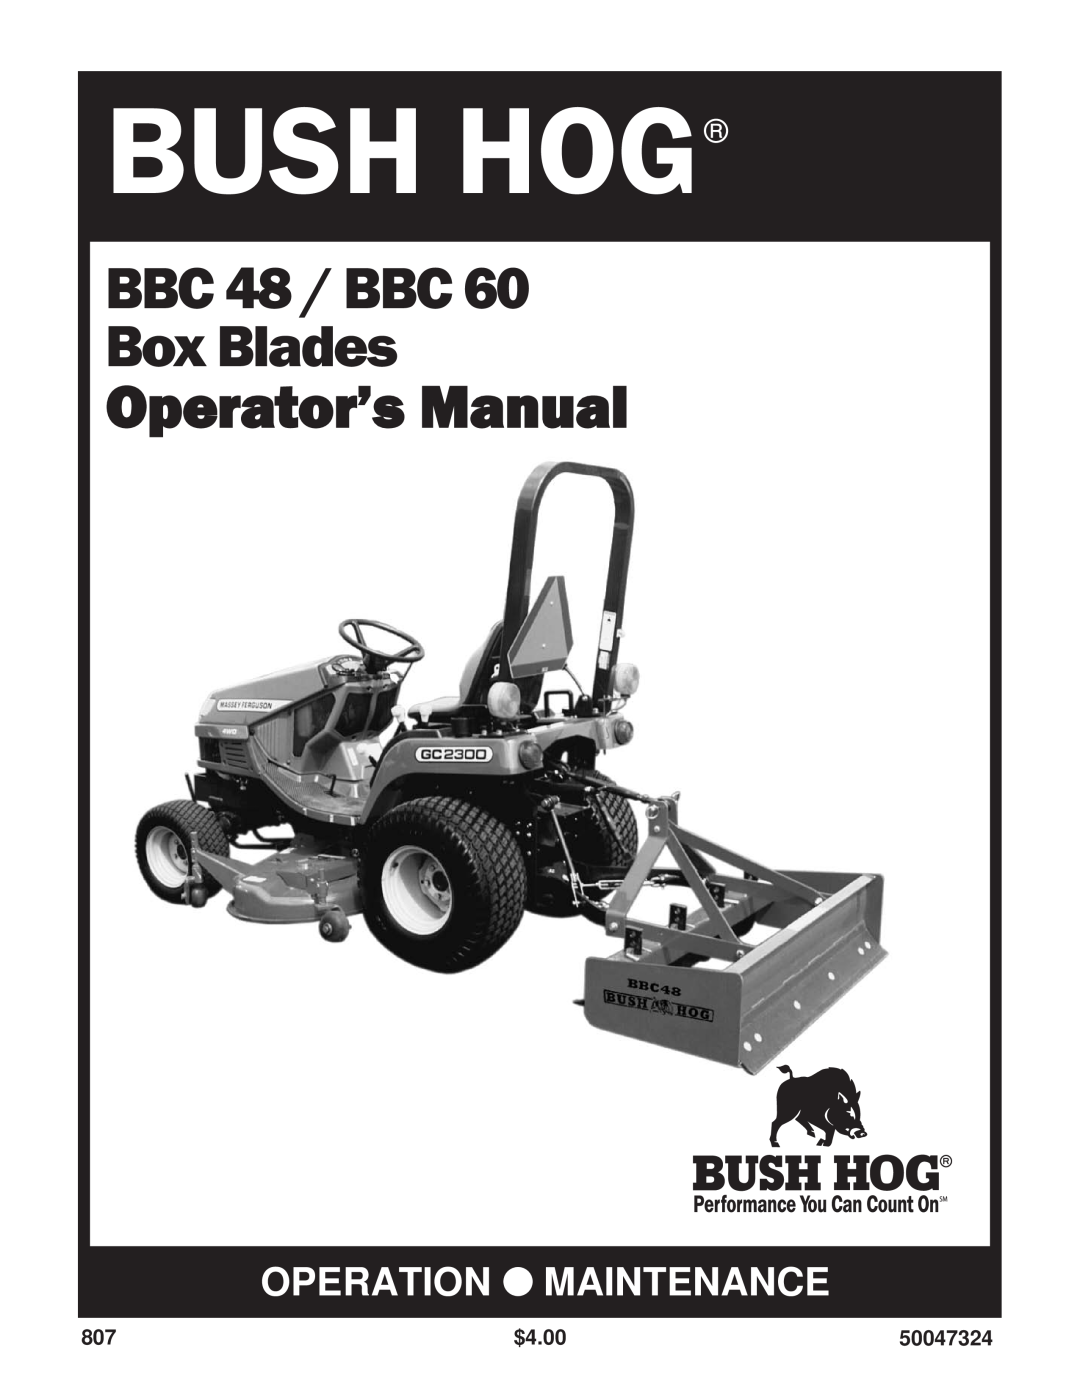 Bush Hog BBC 60 manual $4.00, 50047324, Bush Hog, BBC 48 / BBC Box Blades Operator’s Manual, Operation Maintenance 